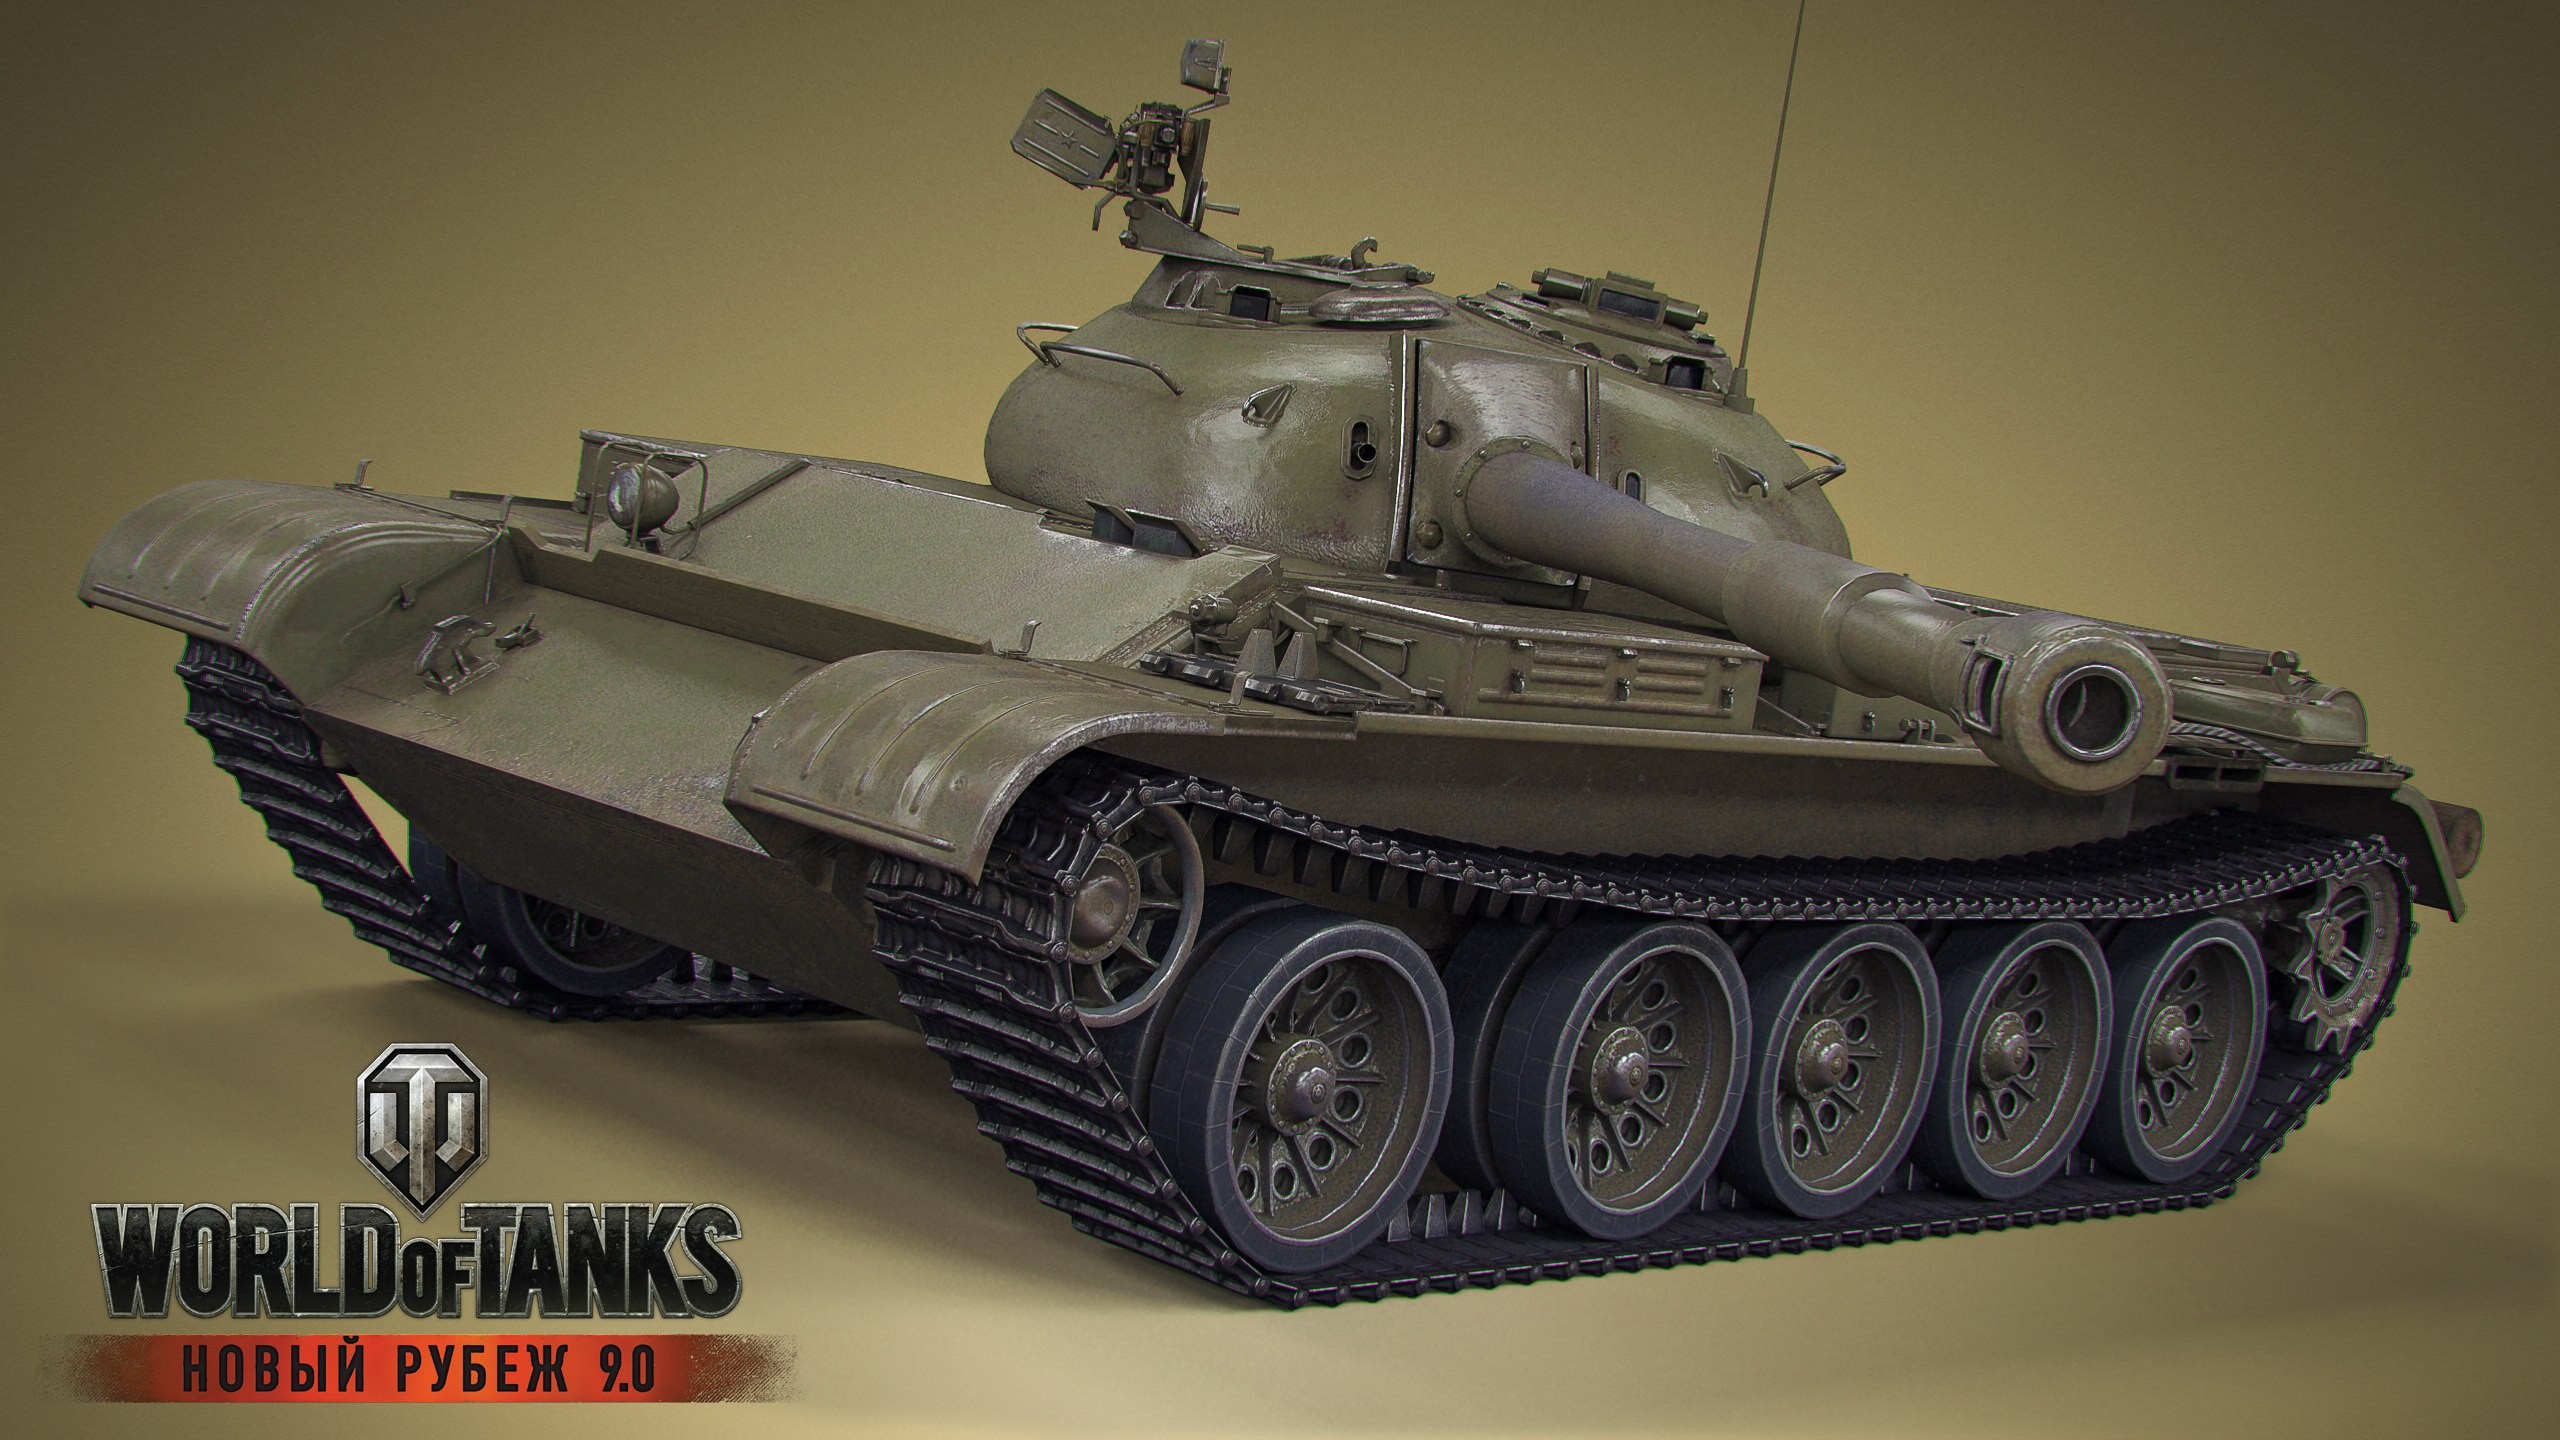 General 2560x1440 World of Tanks tank wargaming video games CGI T-54